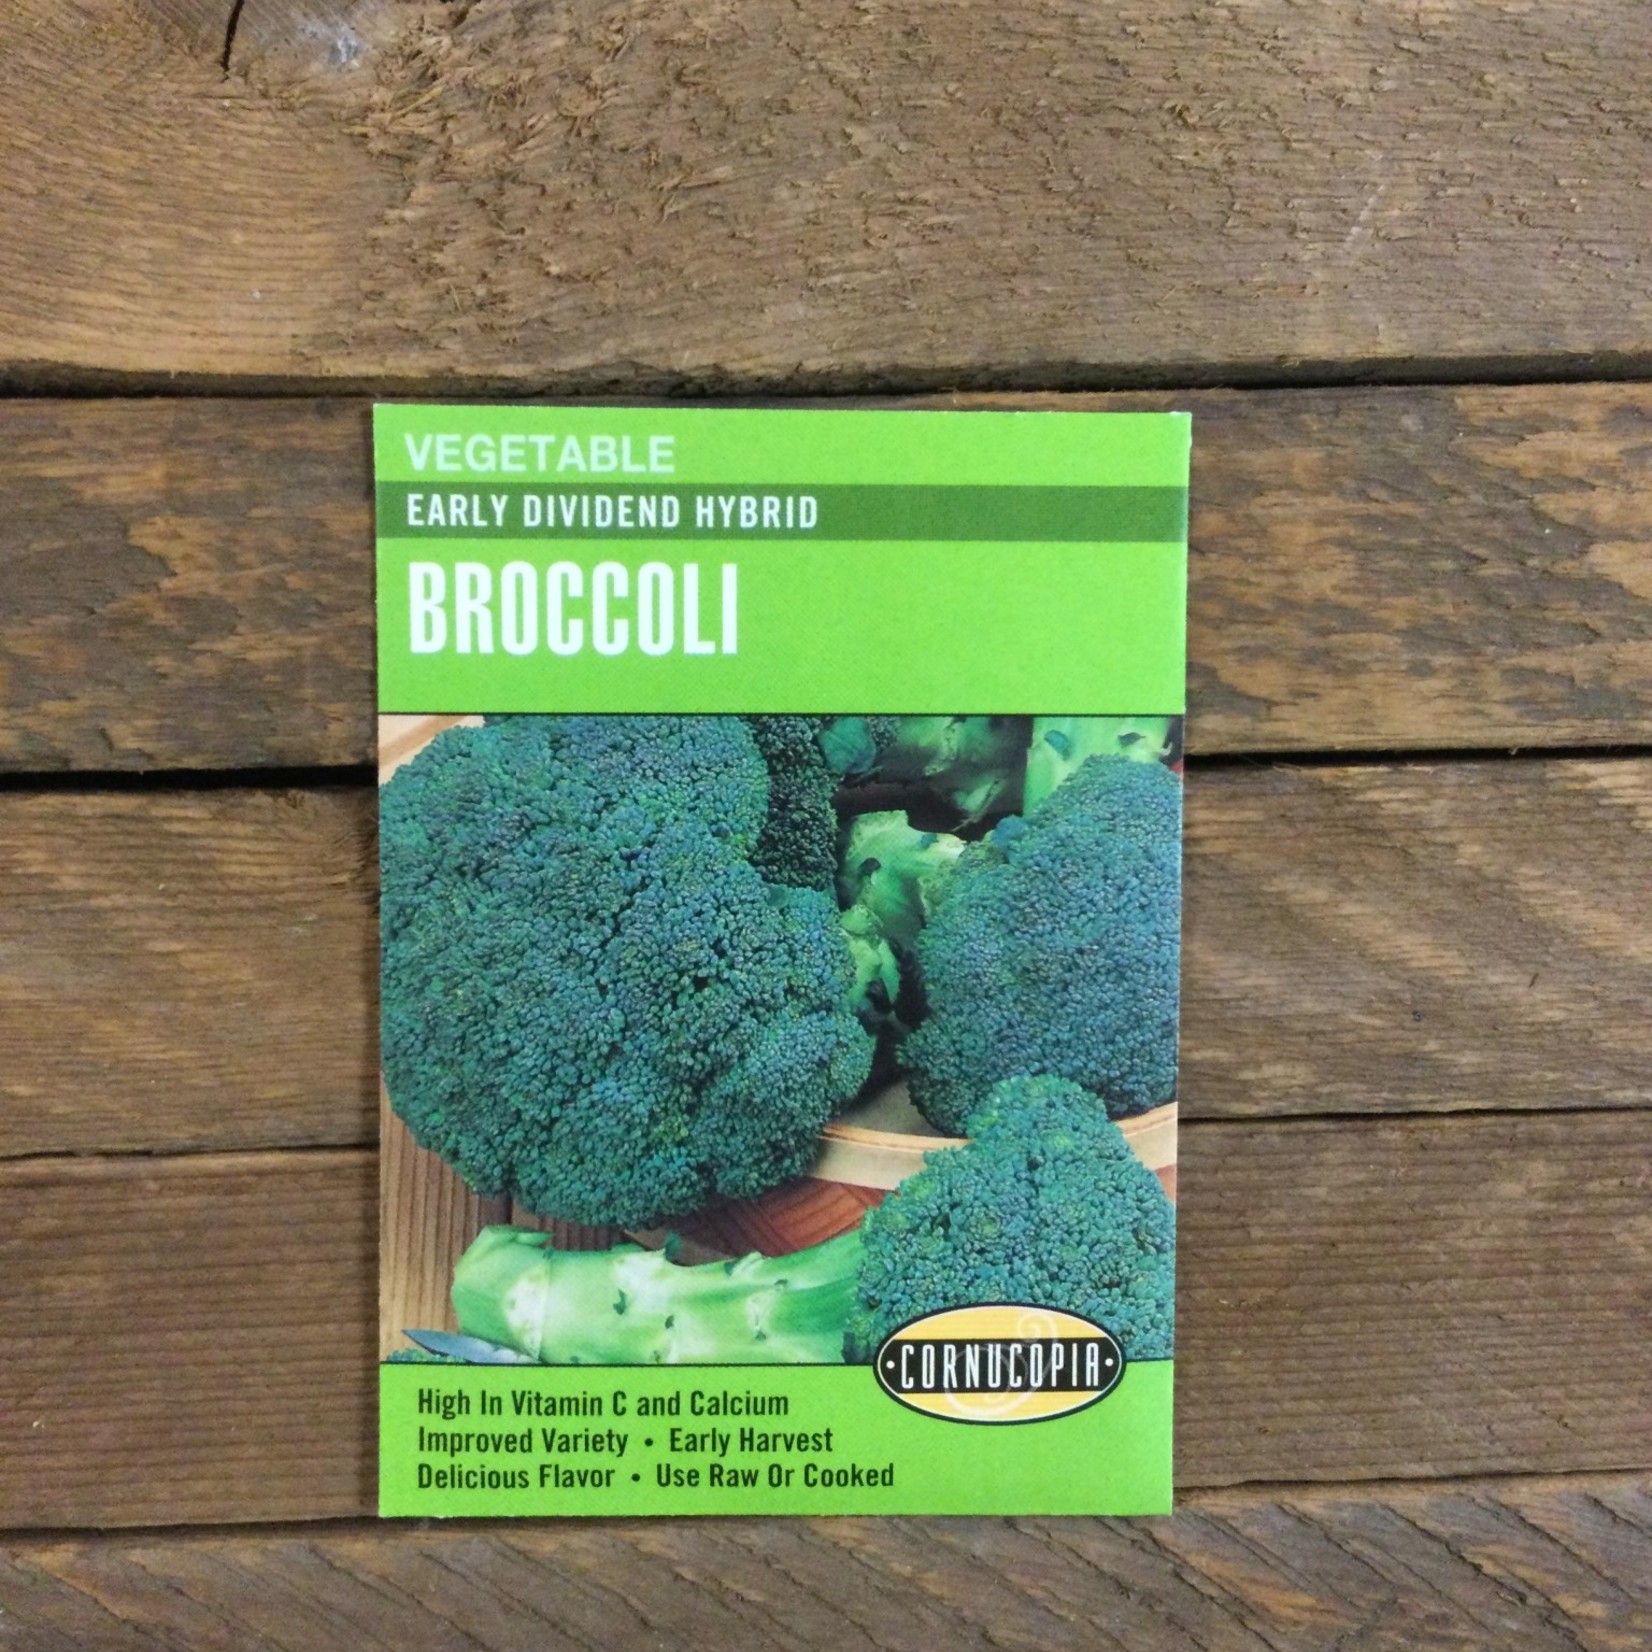 Cornucopia Broccoli 'Early Dividend Hybrid' Seeds